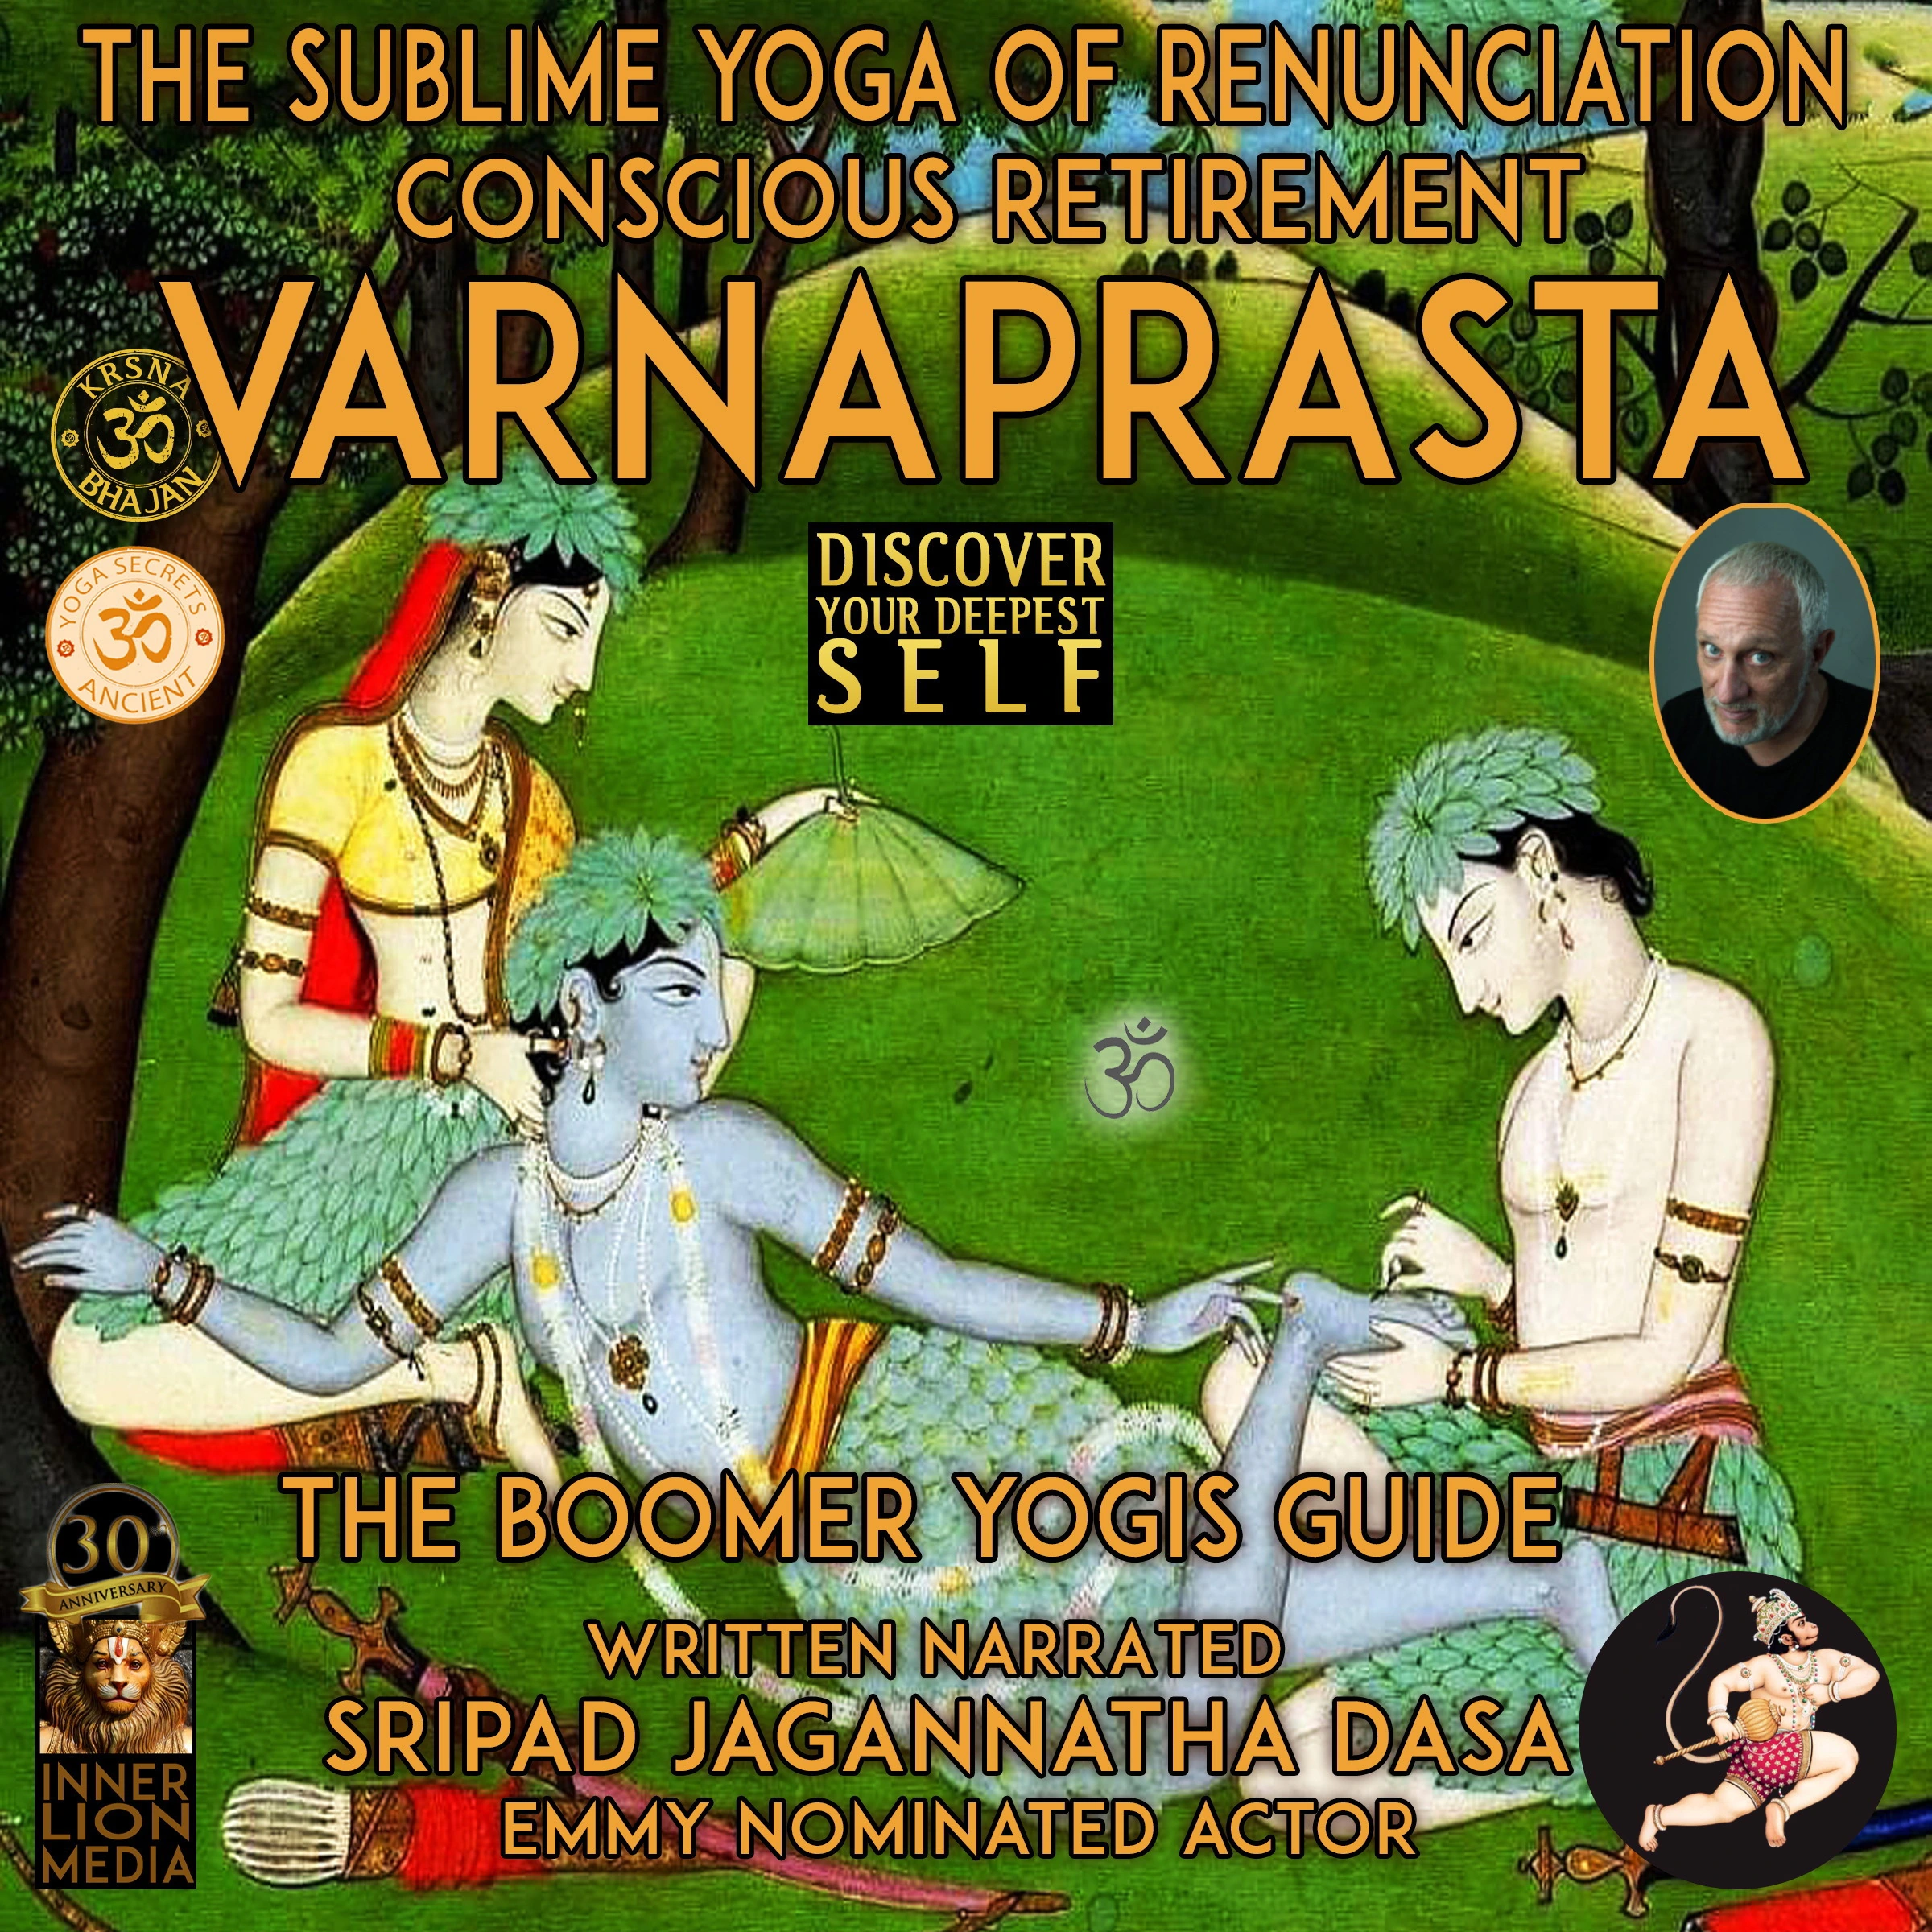 Varnaprast The Sublime Yoga Of Renunciation by Sripad Jagannatha Das Audiobook